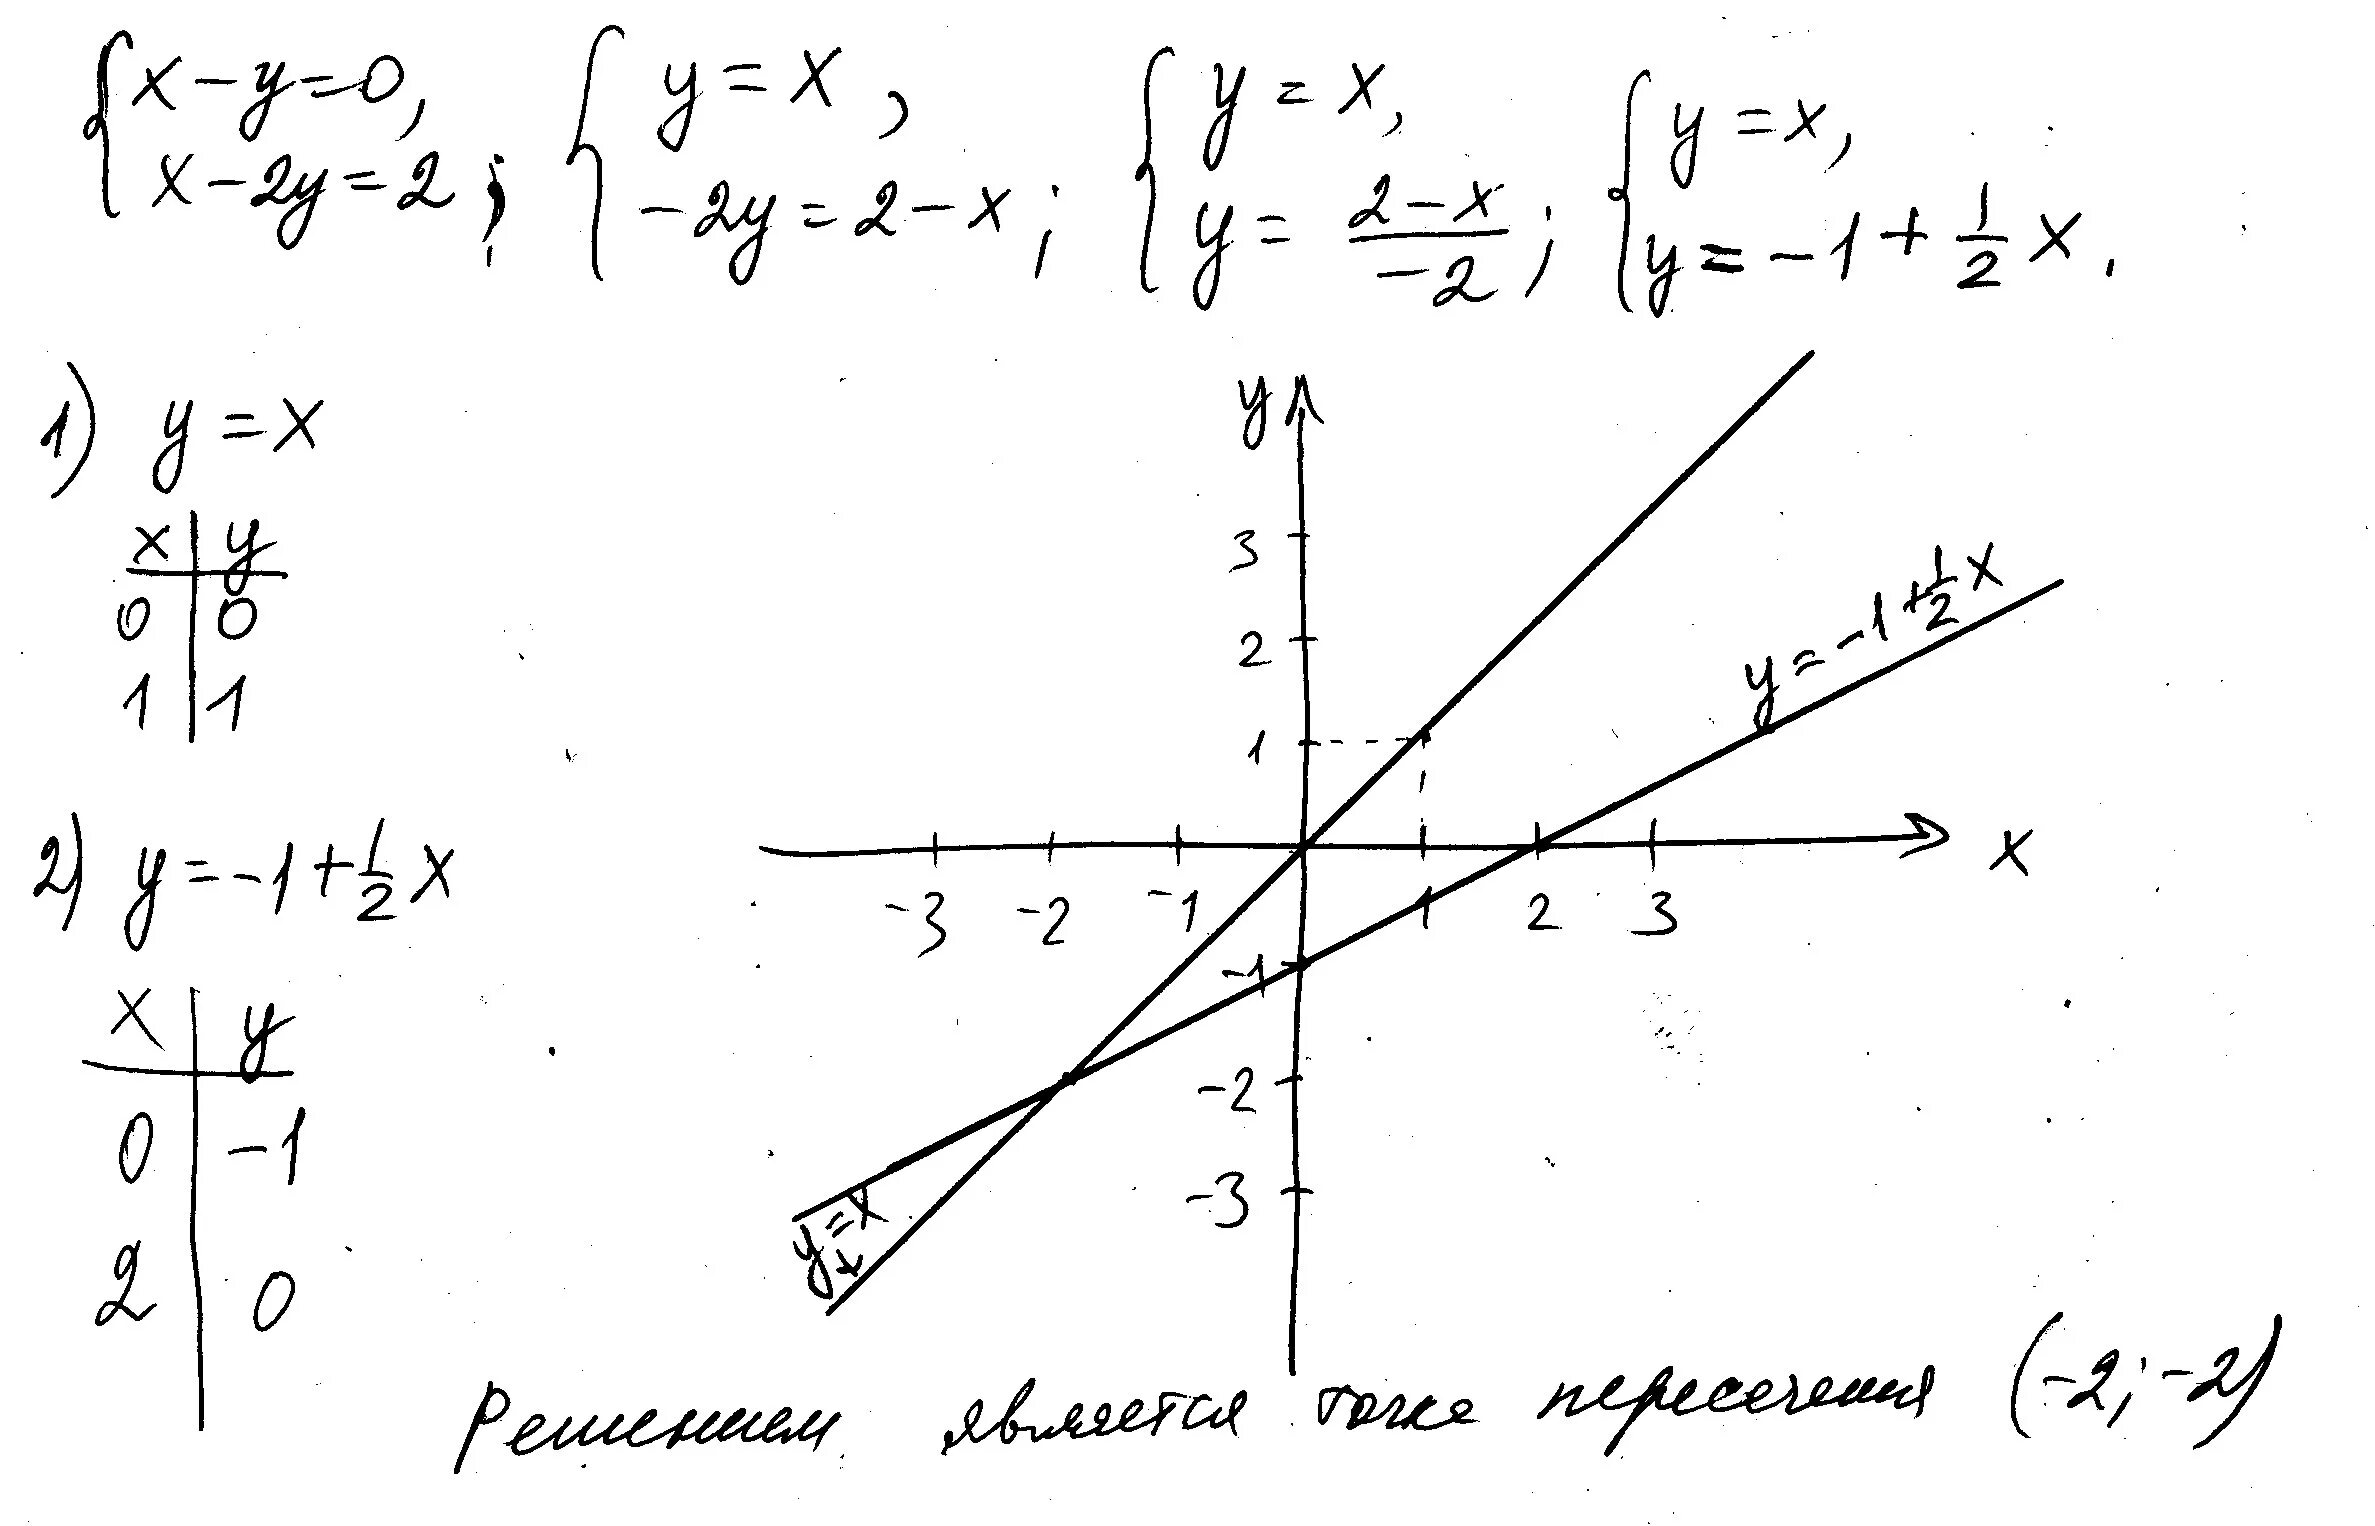 Y 3 2x x 0 решение. Решите графически систему уравнений y x2+2x. Решите систему уравнений способом графическим x +y=0 x+2y=2. Решите графически систему уравнений x^2 +y^2. Решите графически систему уравнений y=x^2 x=y-2.